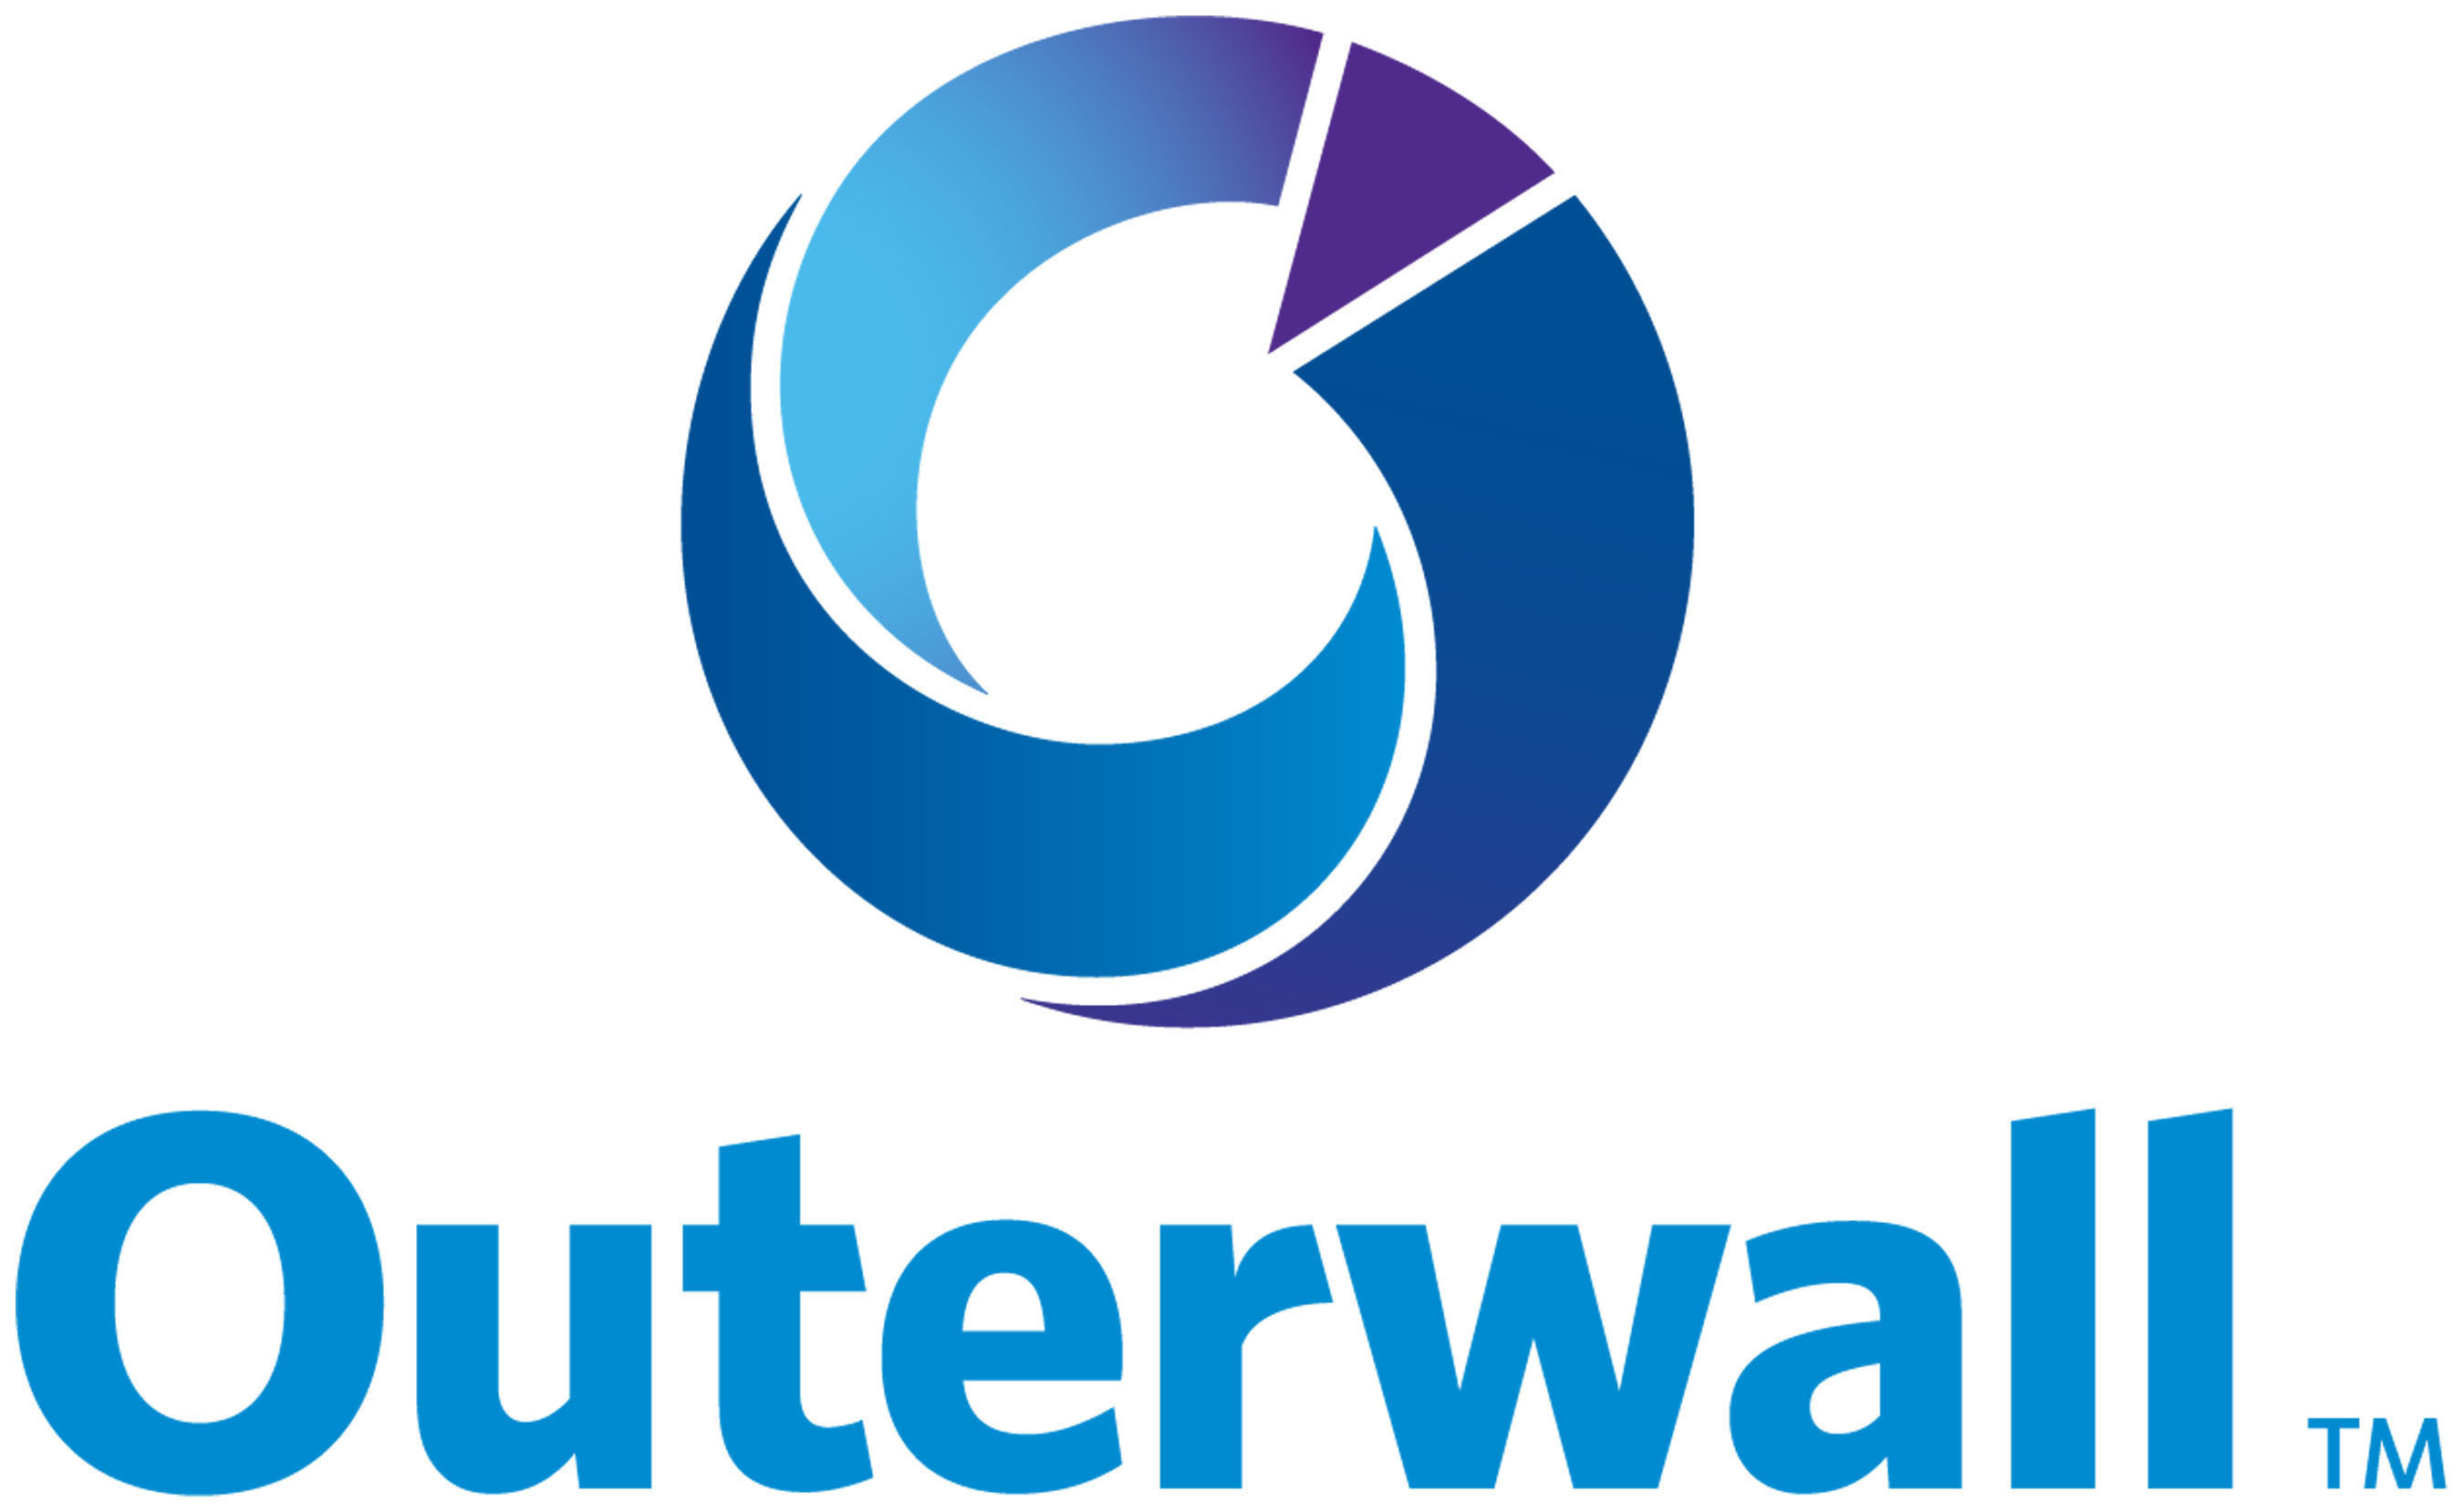 Outerwall Inc. logo.